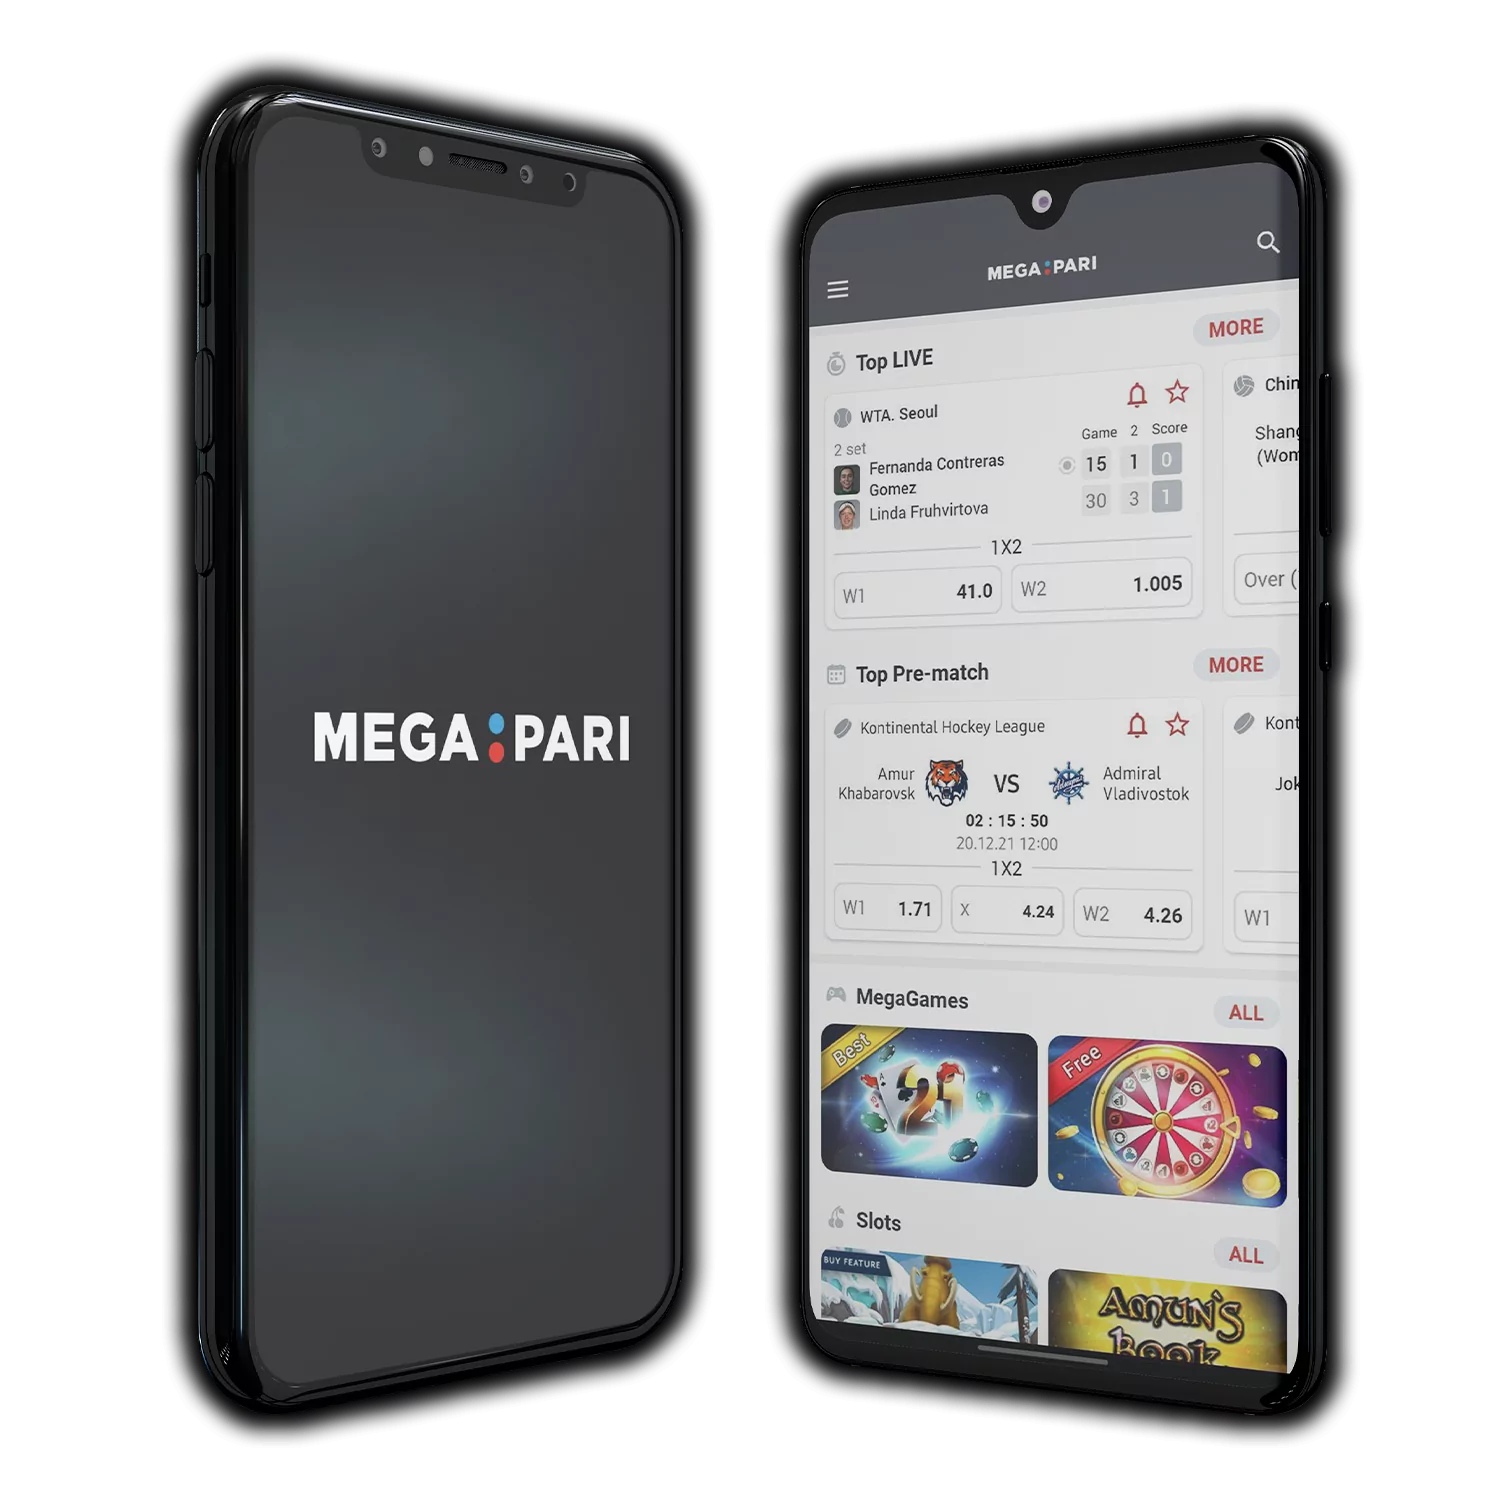 Install the MegaPari mobile application.